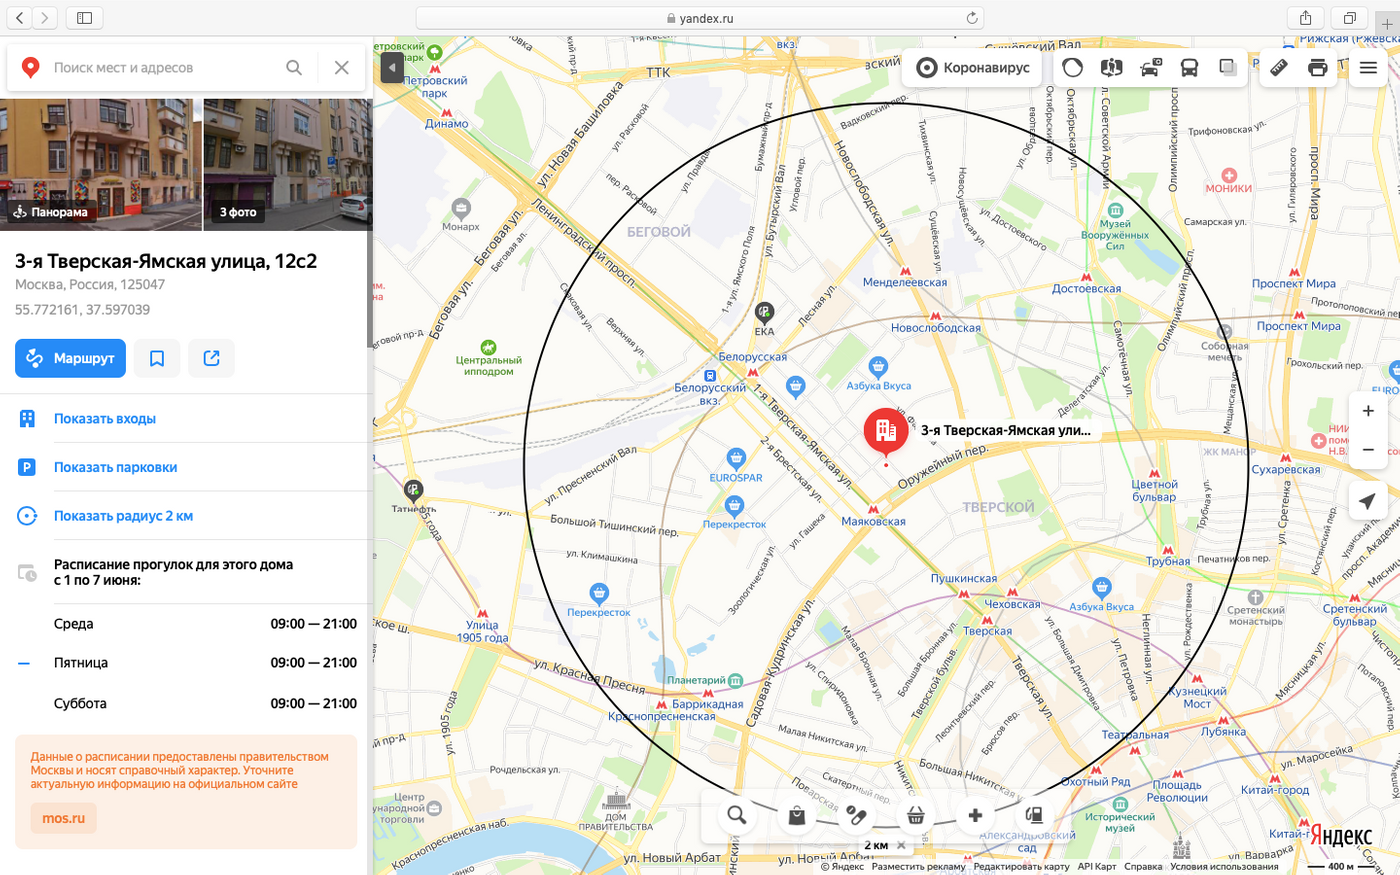 Найдите на картах приложение. Яндекс карты. Яндекс карты Москва. Карта Москвы Яндекс карты. Яндекс карты график прогулок.